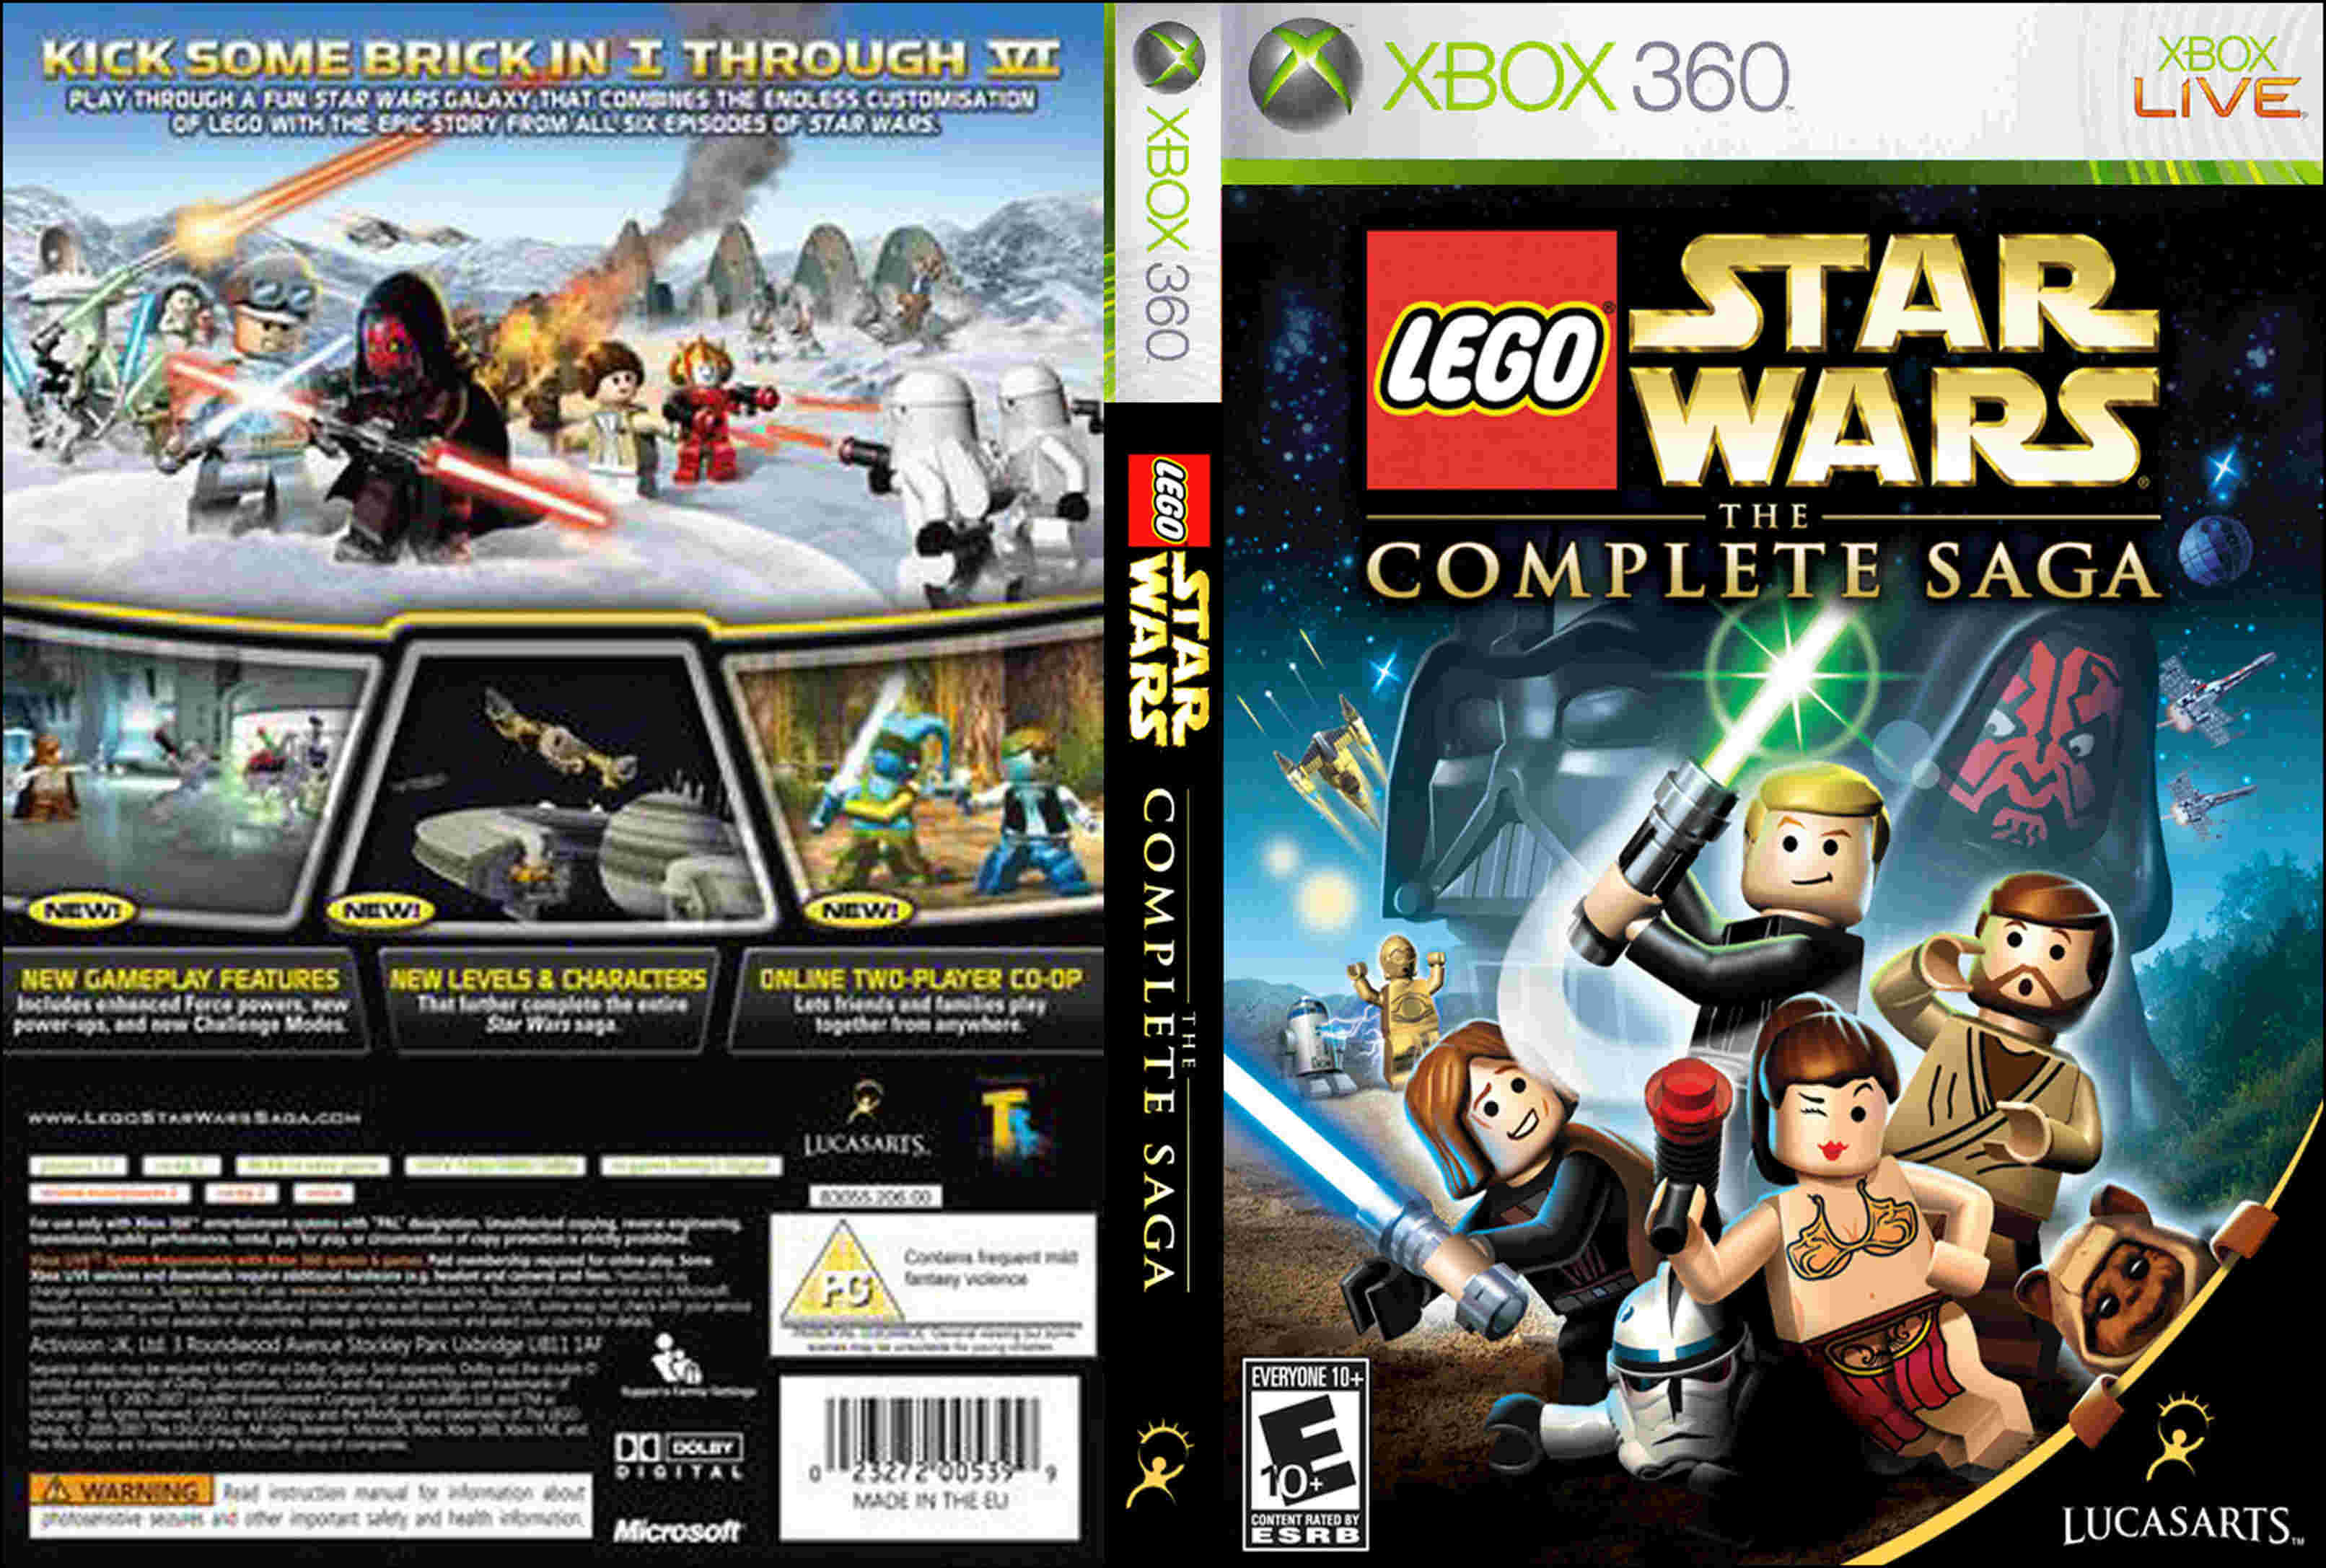 LEGO Star Wars - The Complete Saga on Steam